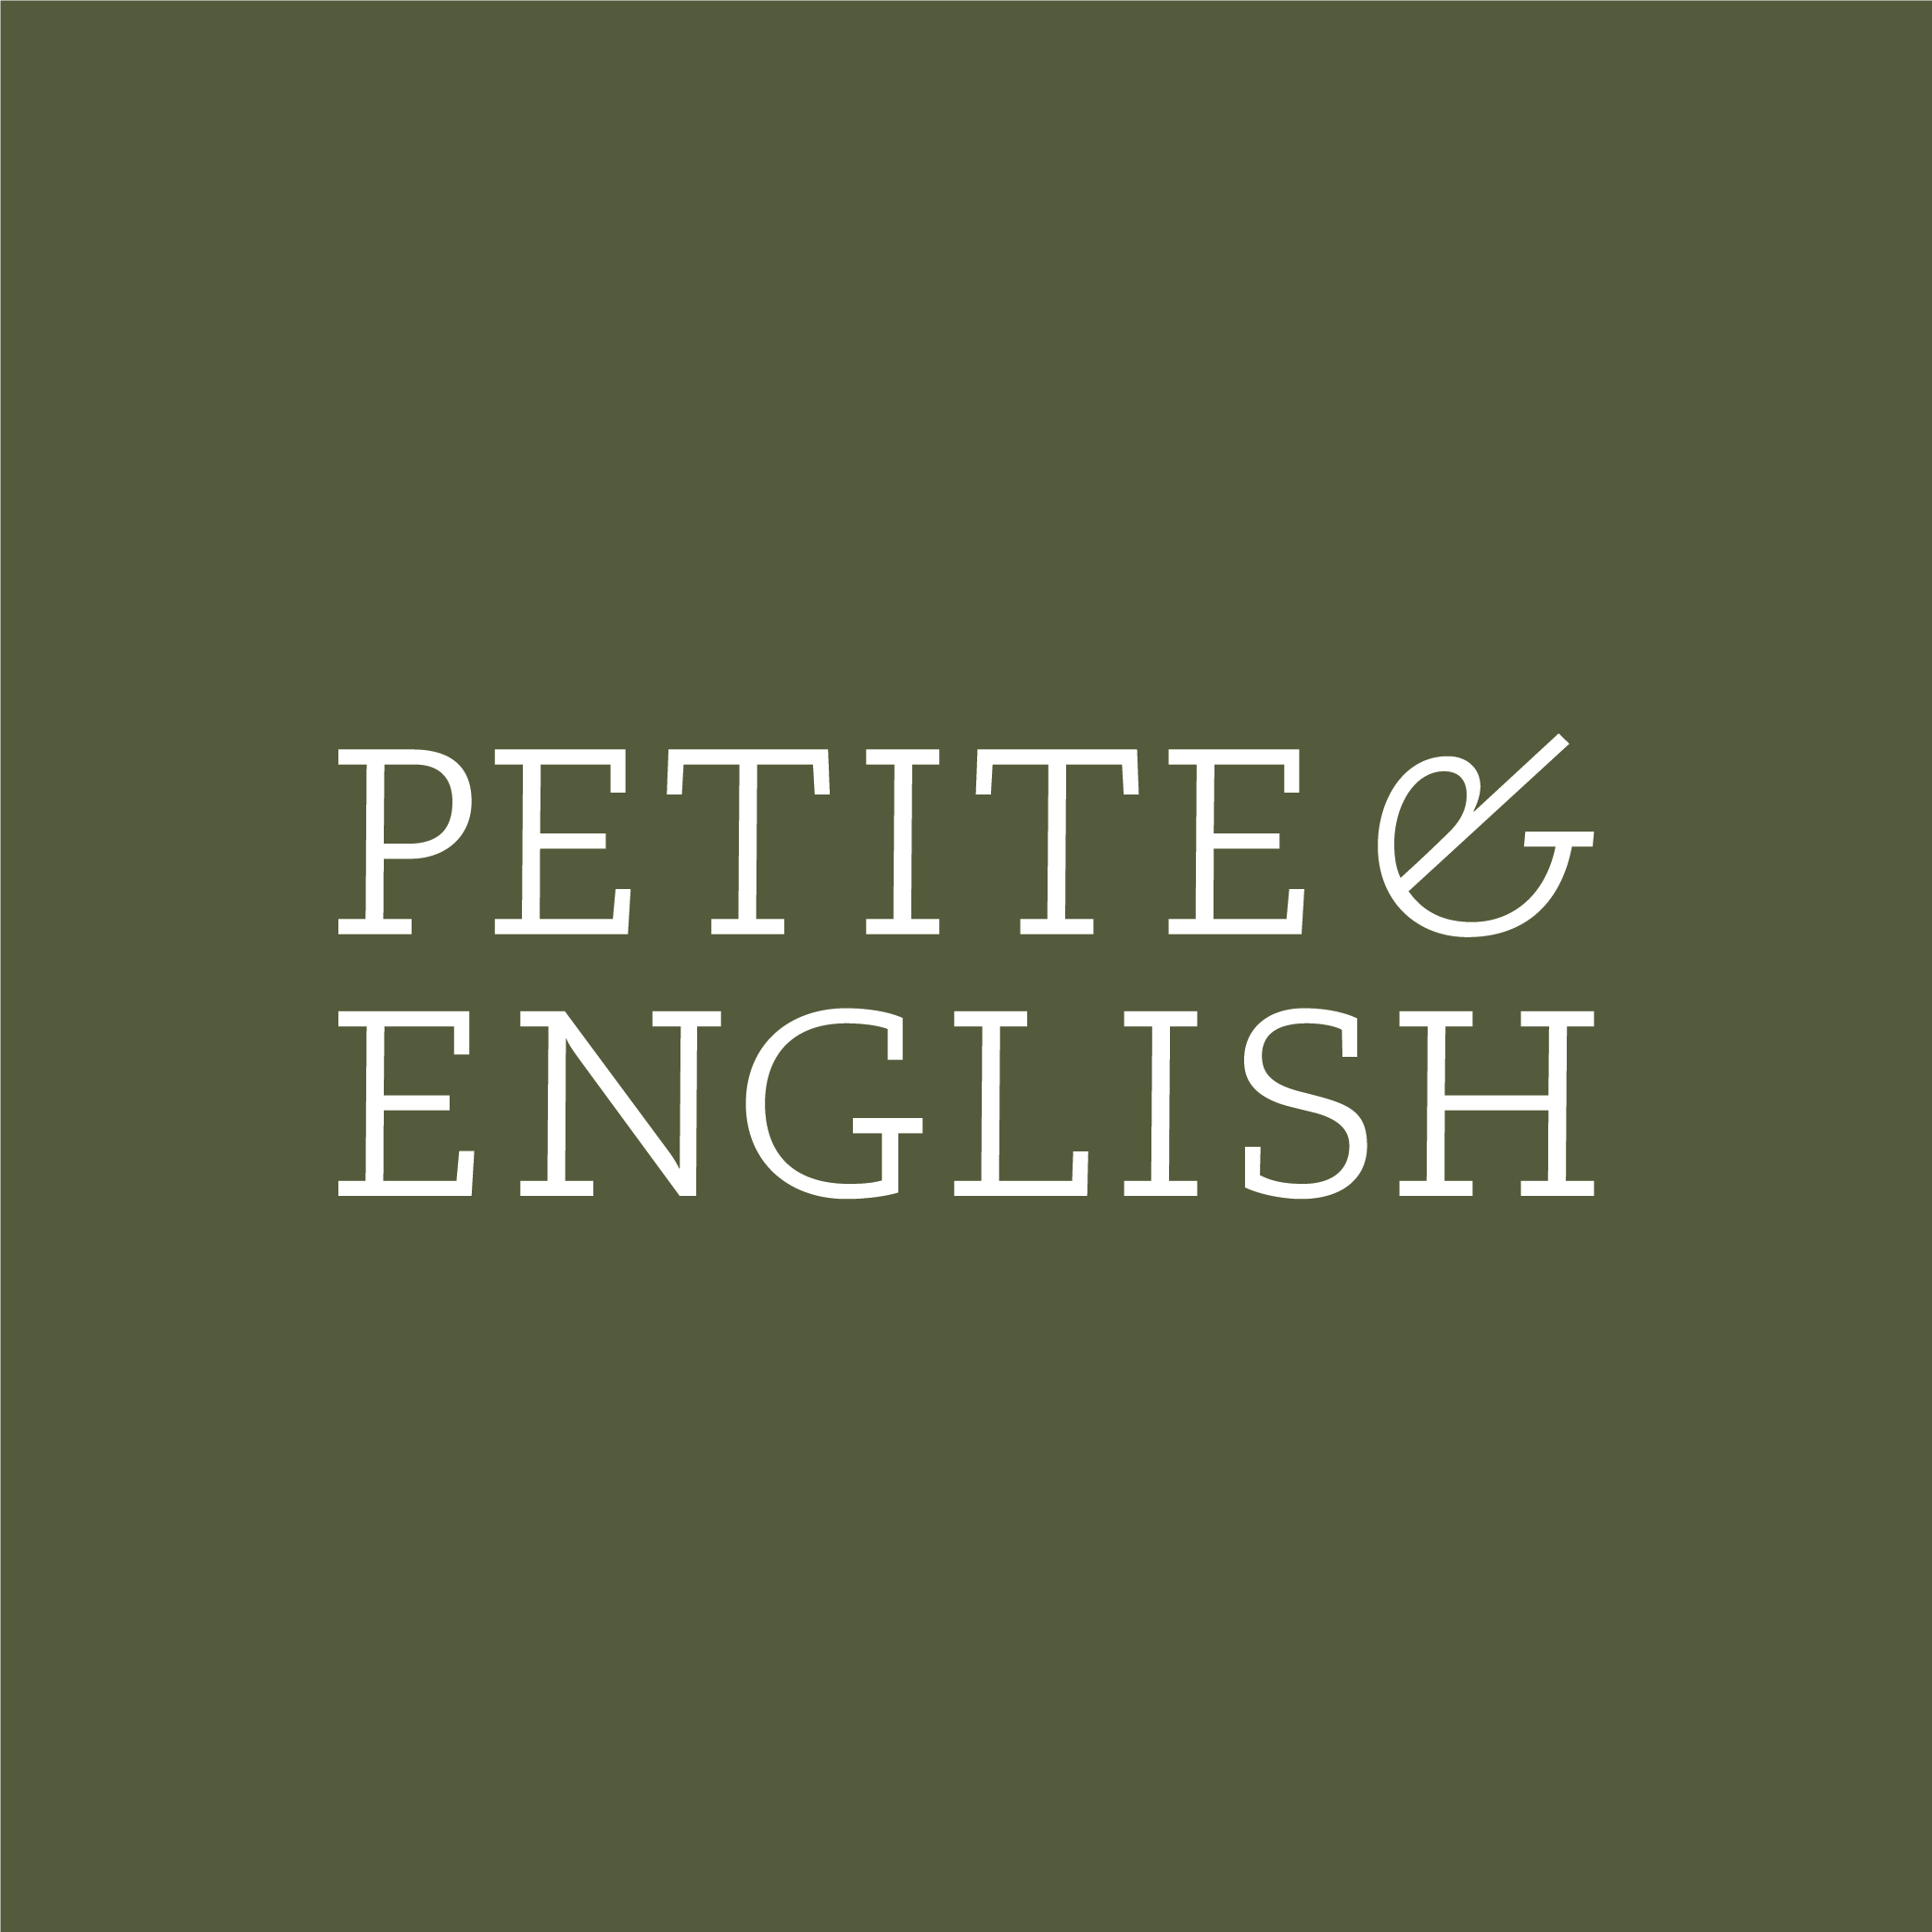 Petite & English